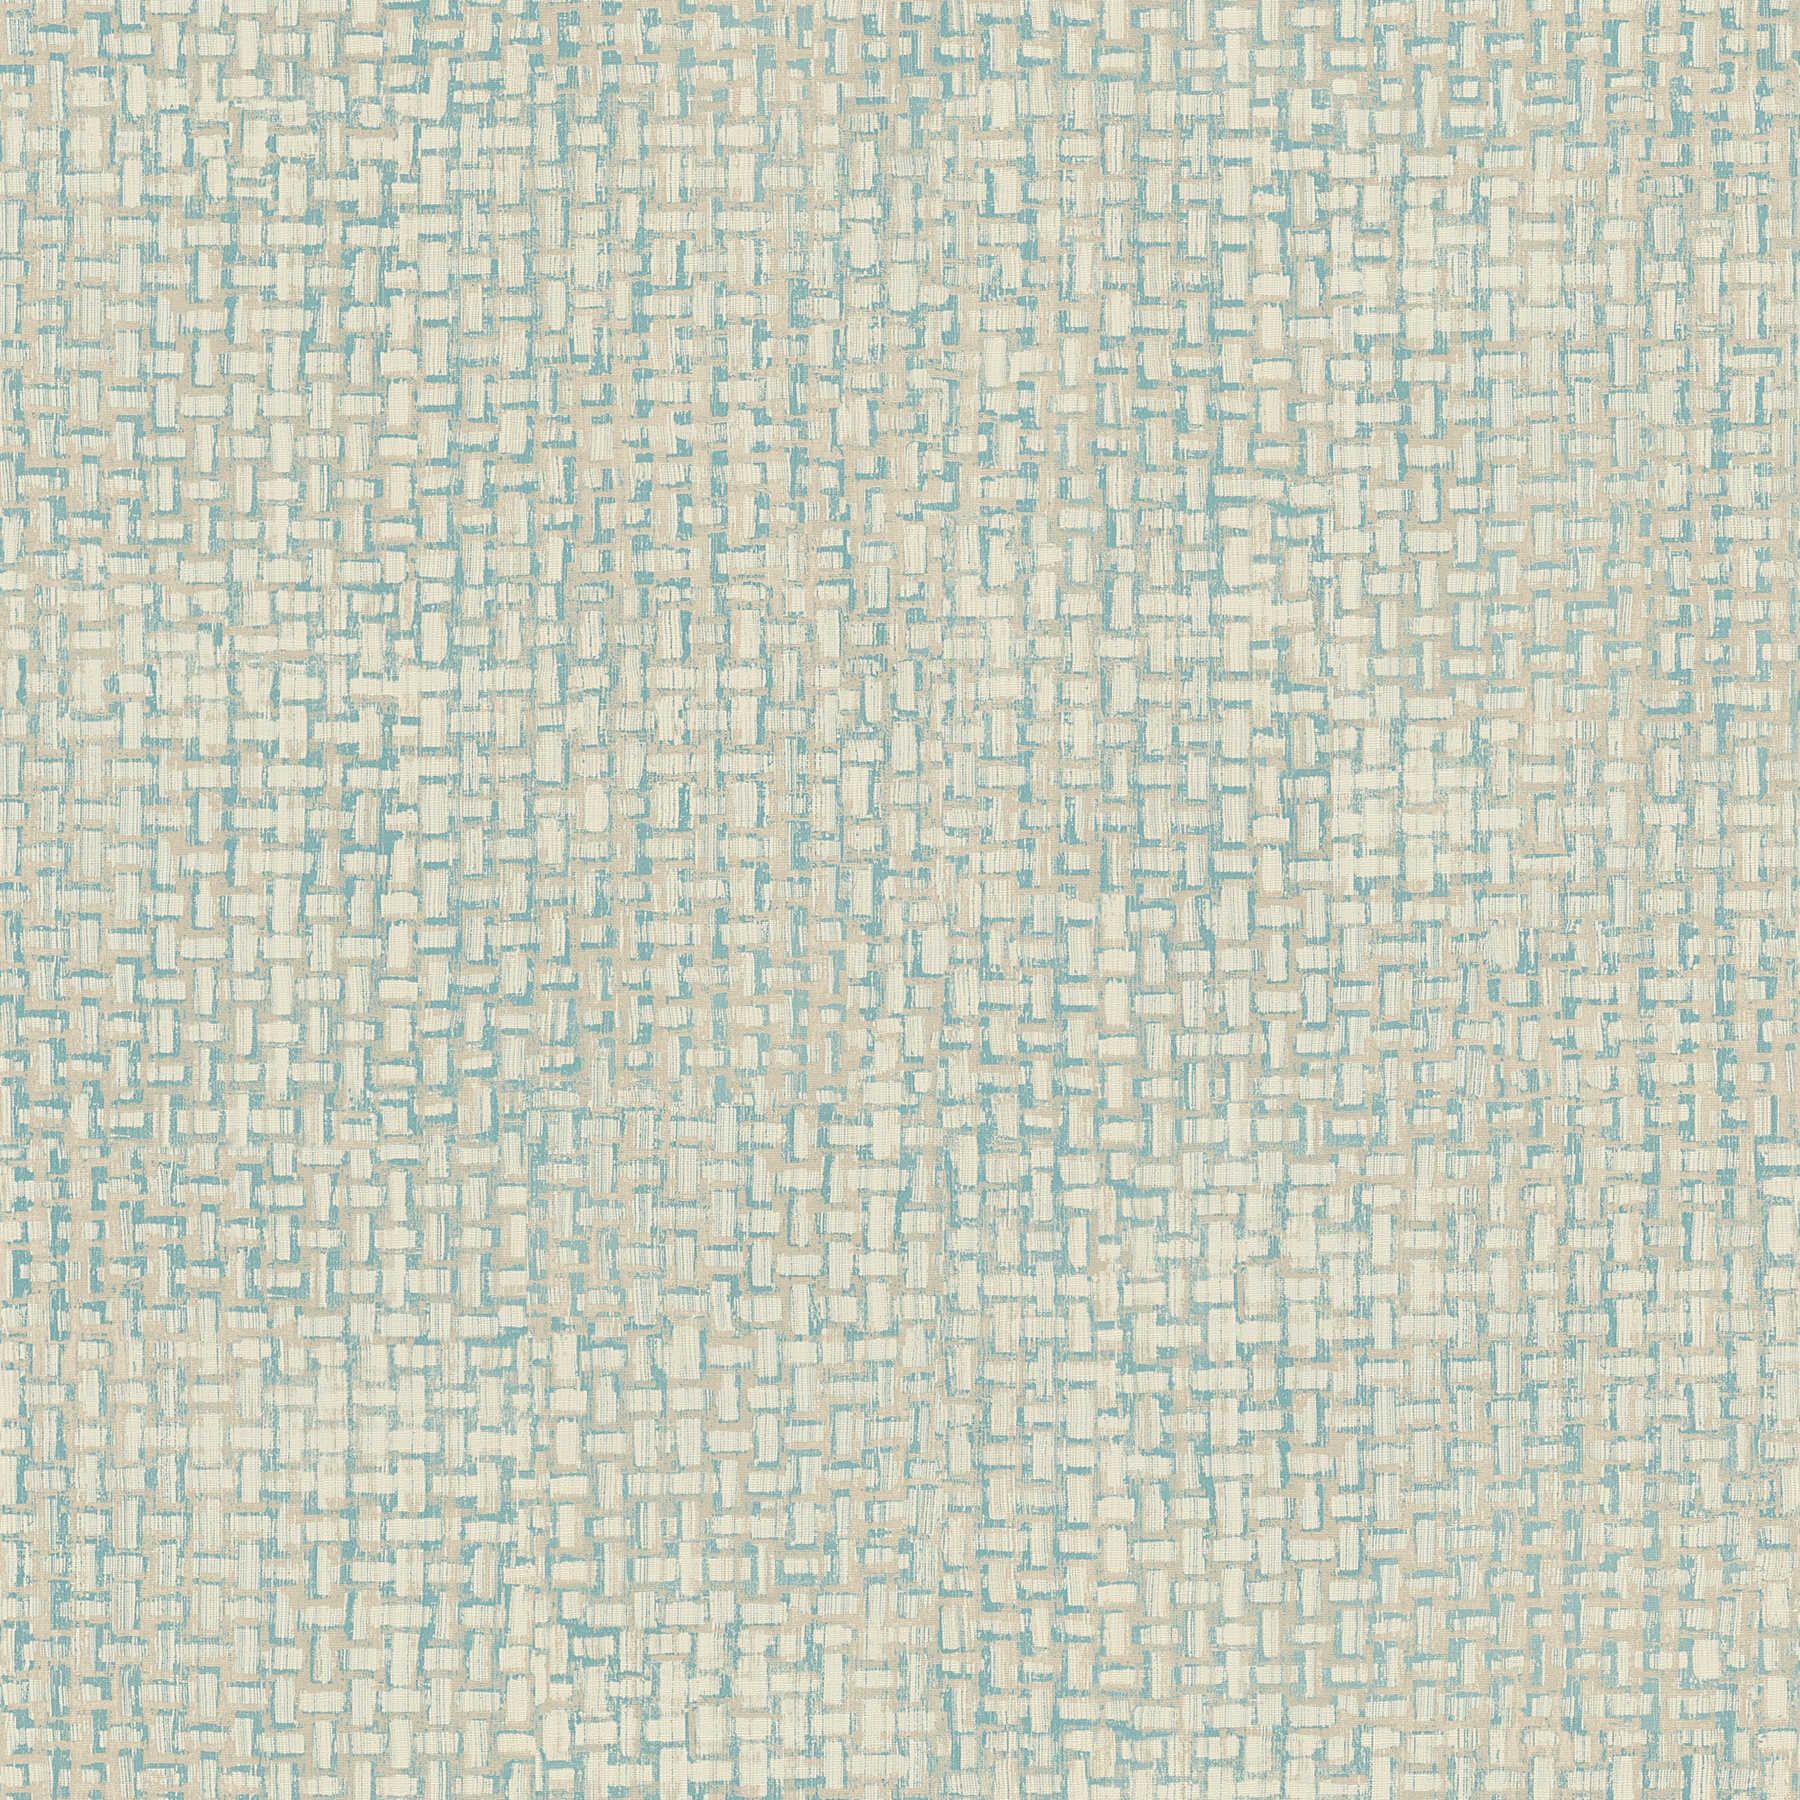 Tapete Textil-Look mit Flechtstruktur – Beige, Blau, Grau
